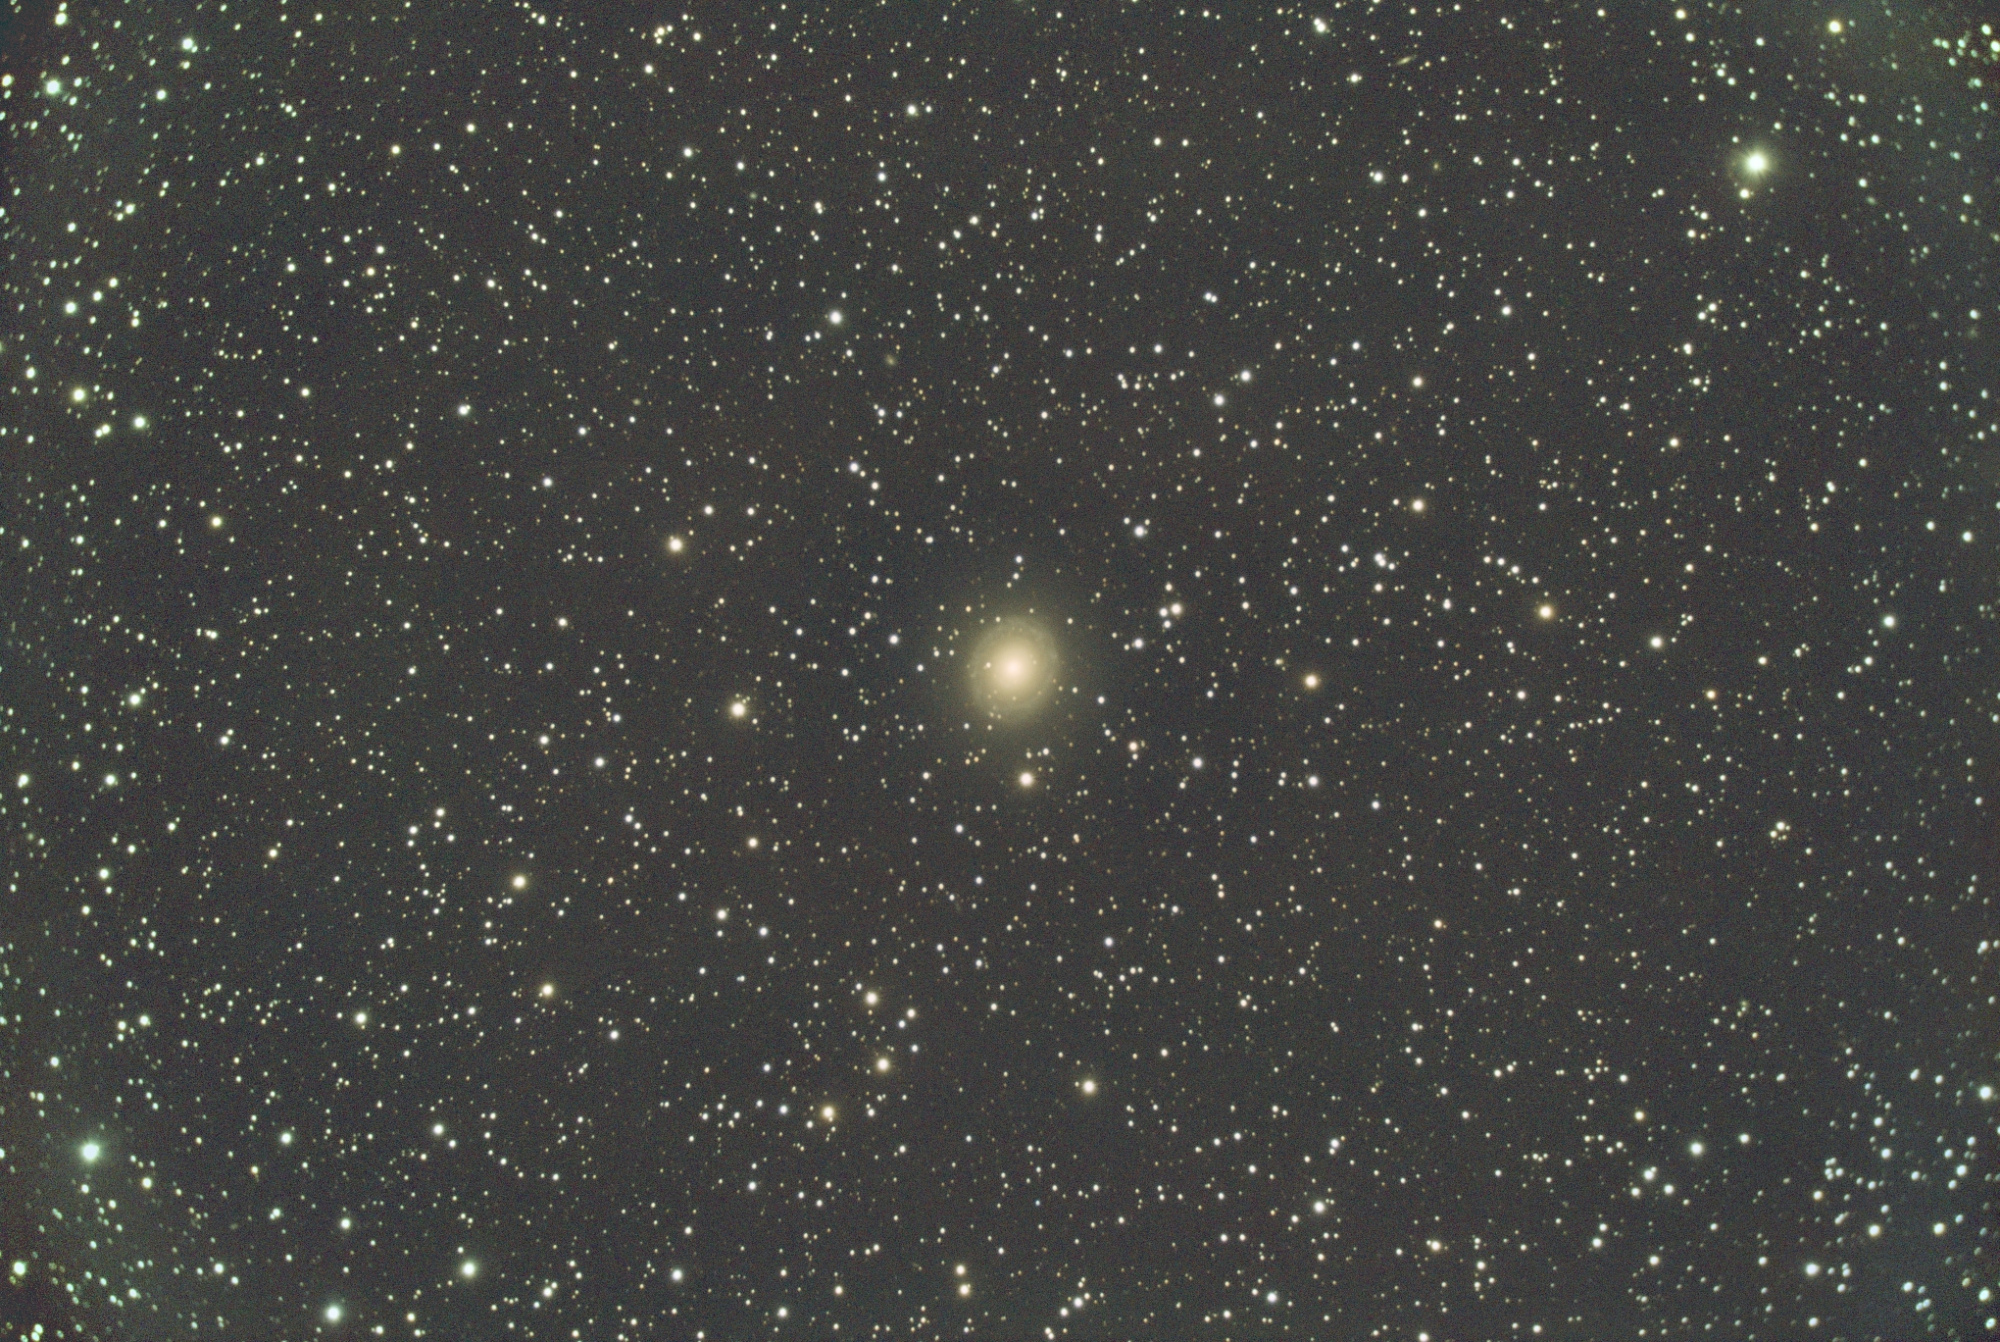 65c9ca3ded493_NGC7217_RGB-crop-aprsgraxpert.thumb.jpg.ef15773990776982568e668c58cc8e81.jpg